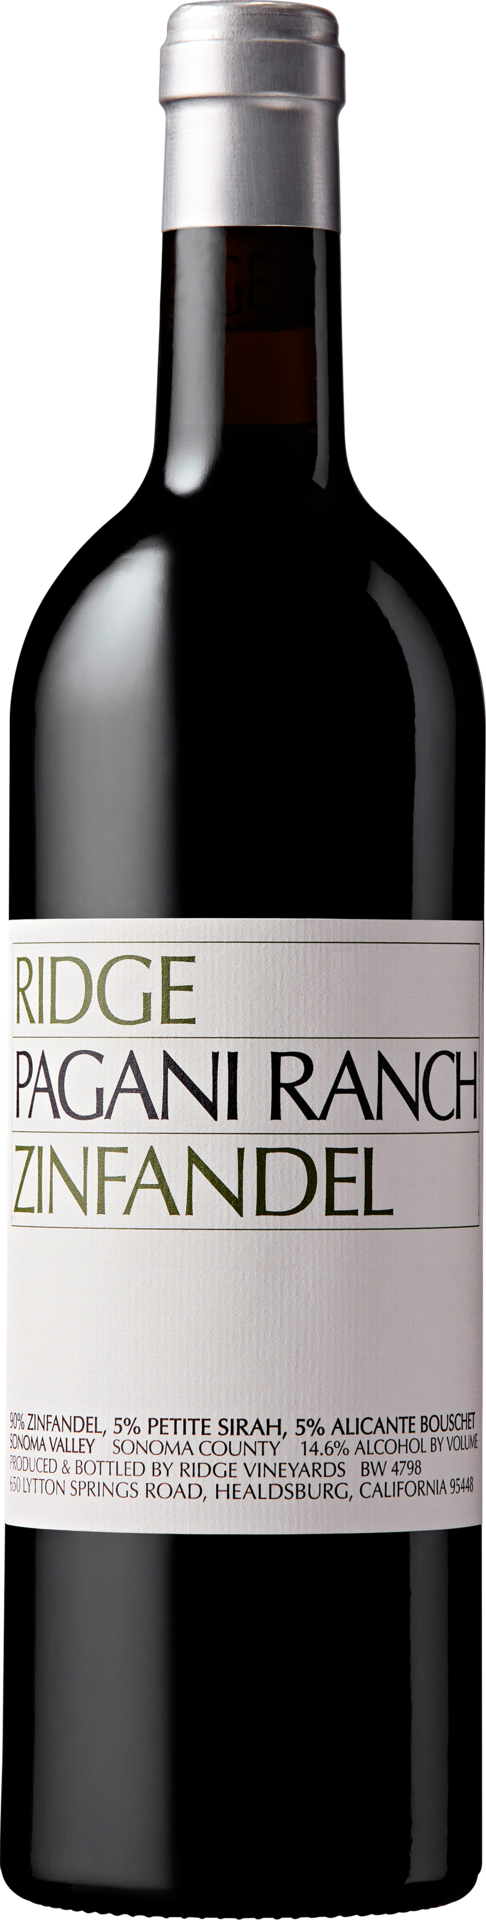 Ridge Pagani Ranch